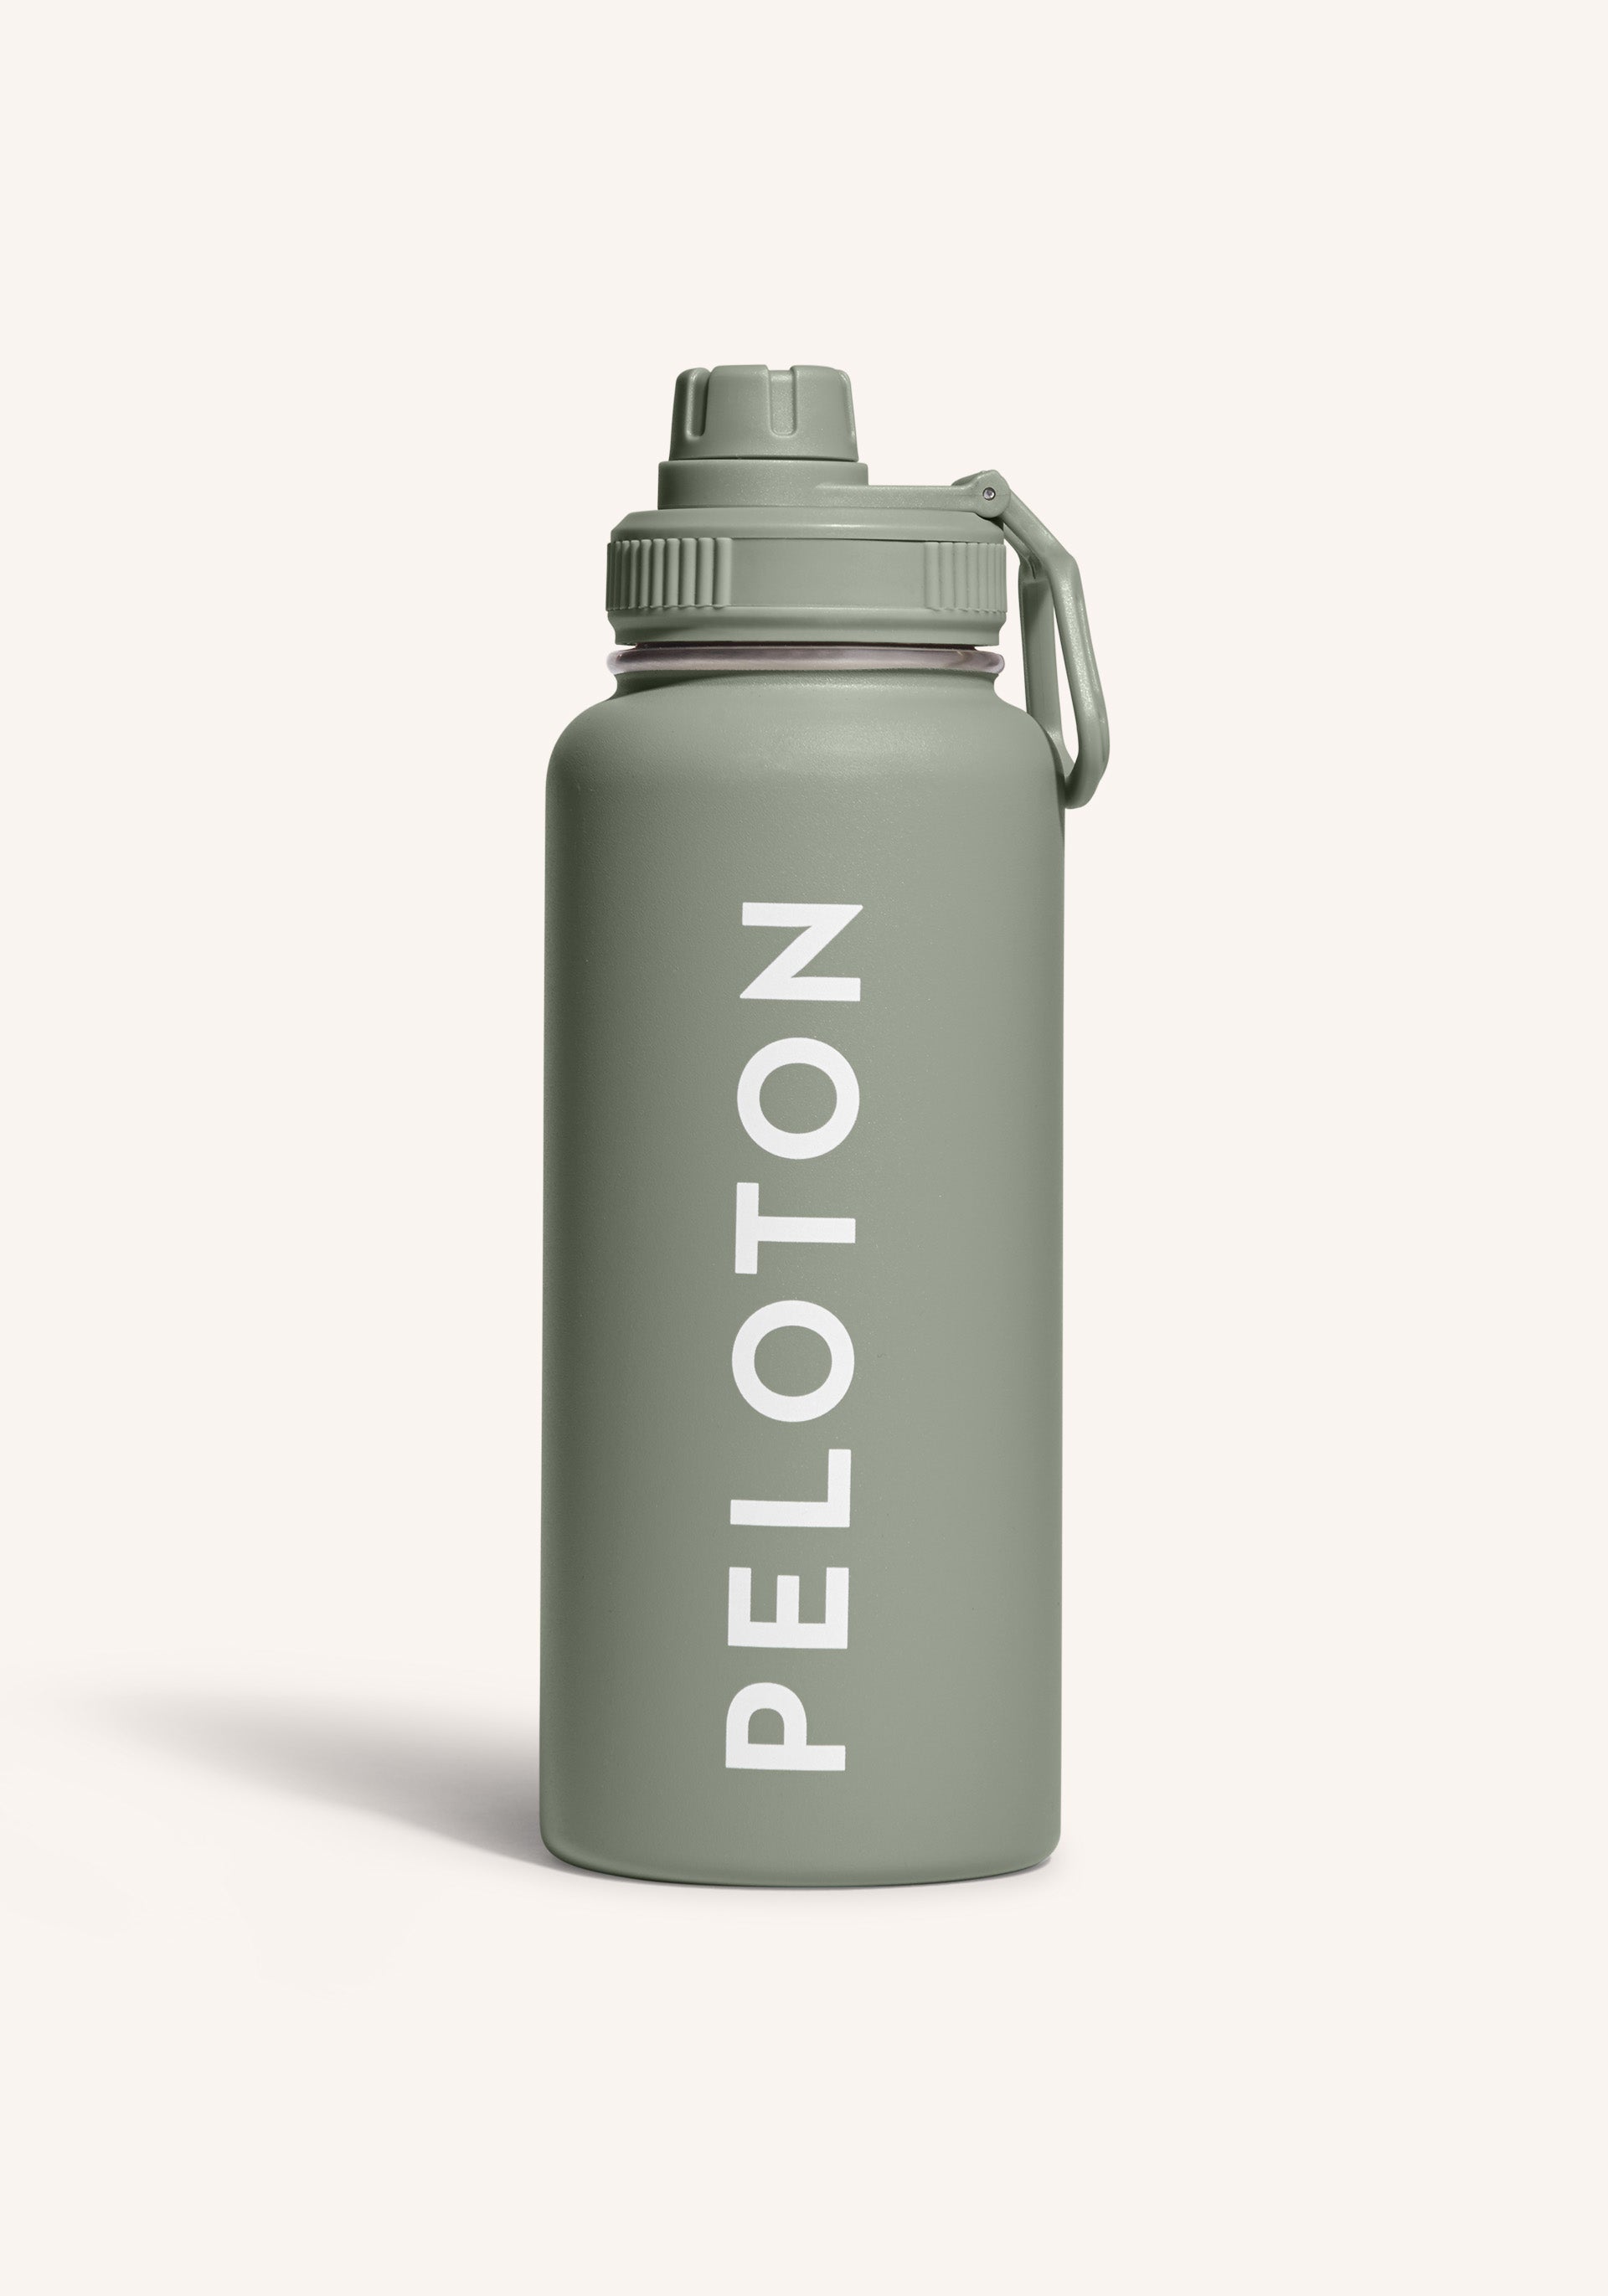 2 Peloton Sleek Glass Water Bottles no Covers